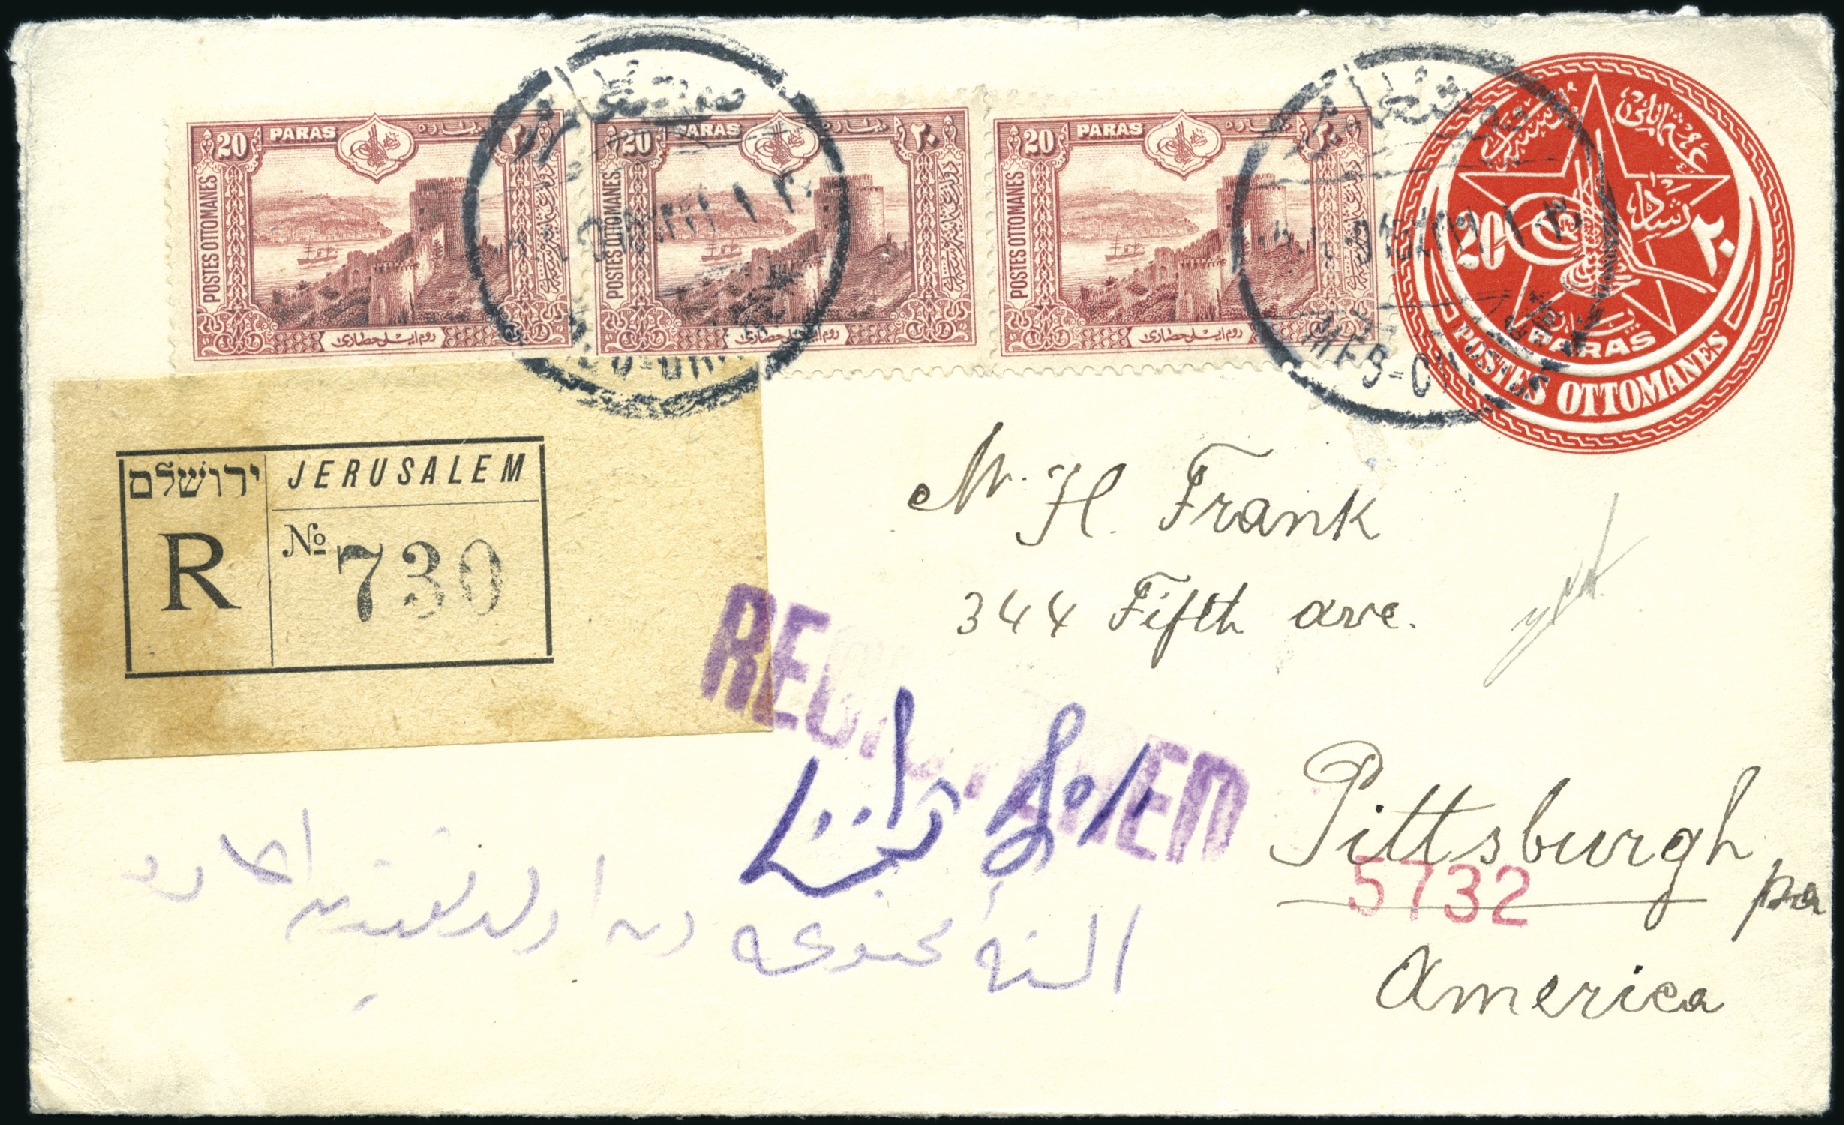 1989- Habsburg Feldman: Stamps and Postal History Europe Zurich